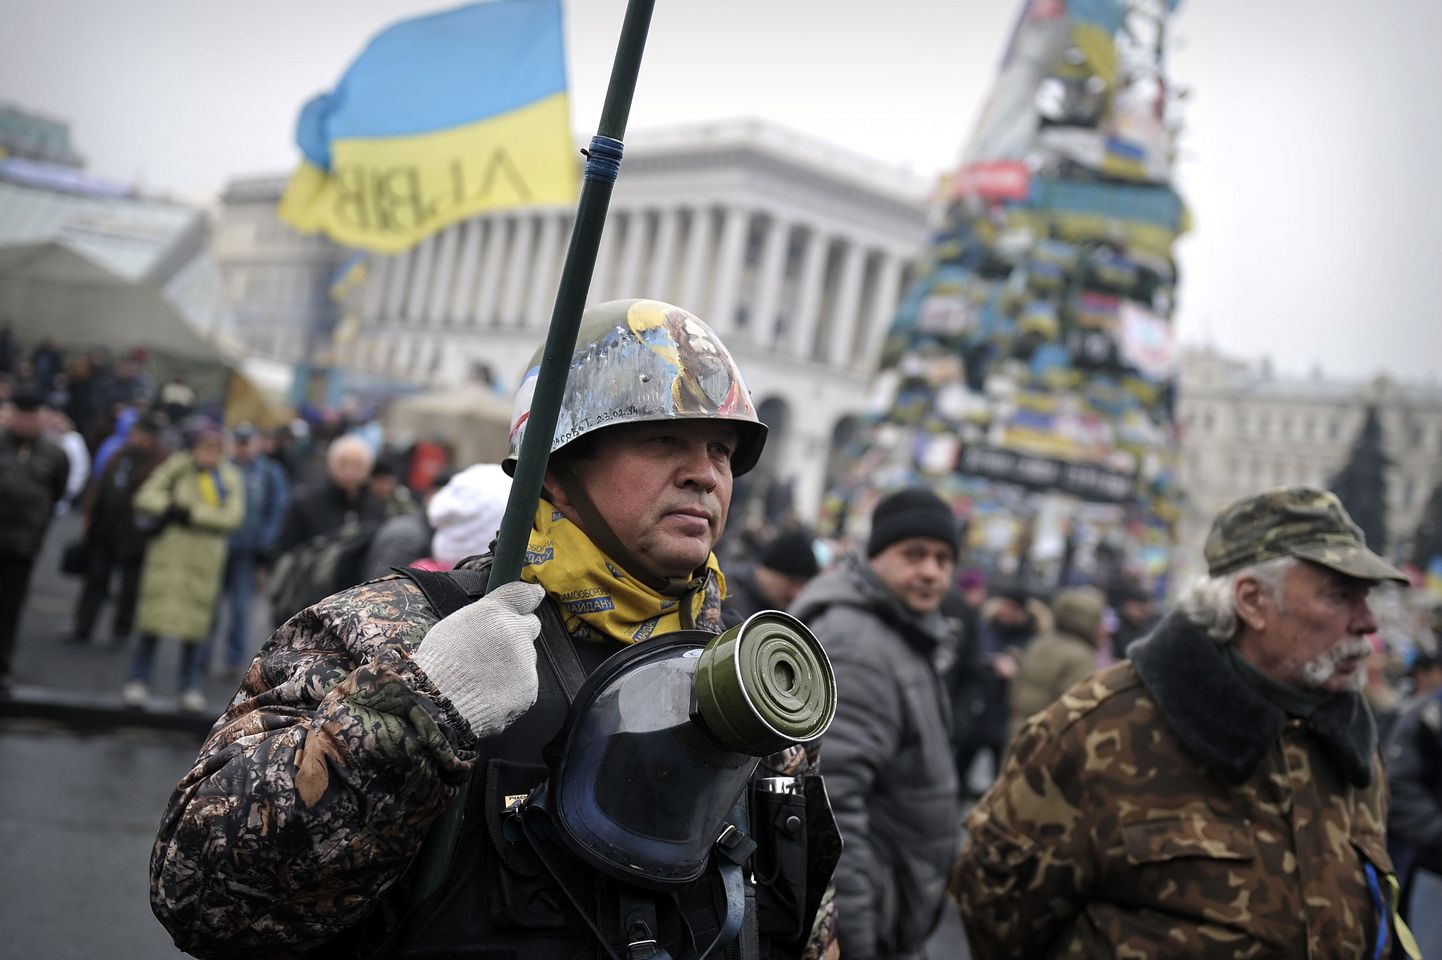 Участники майдана. Евромайдан 2014. Киев Майдан 2014. Майдан независимости 2014.